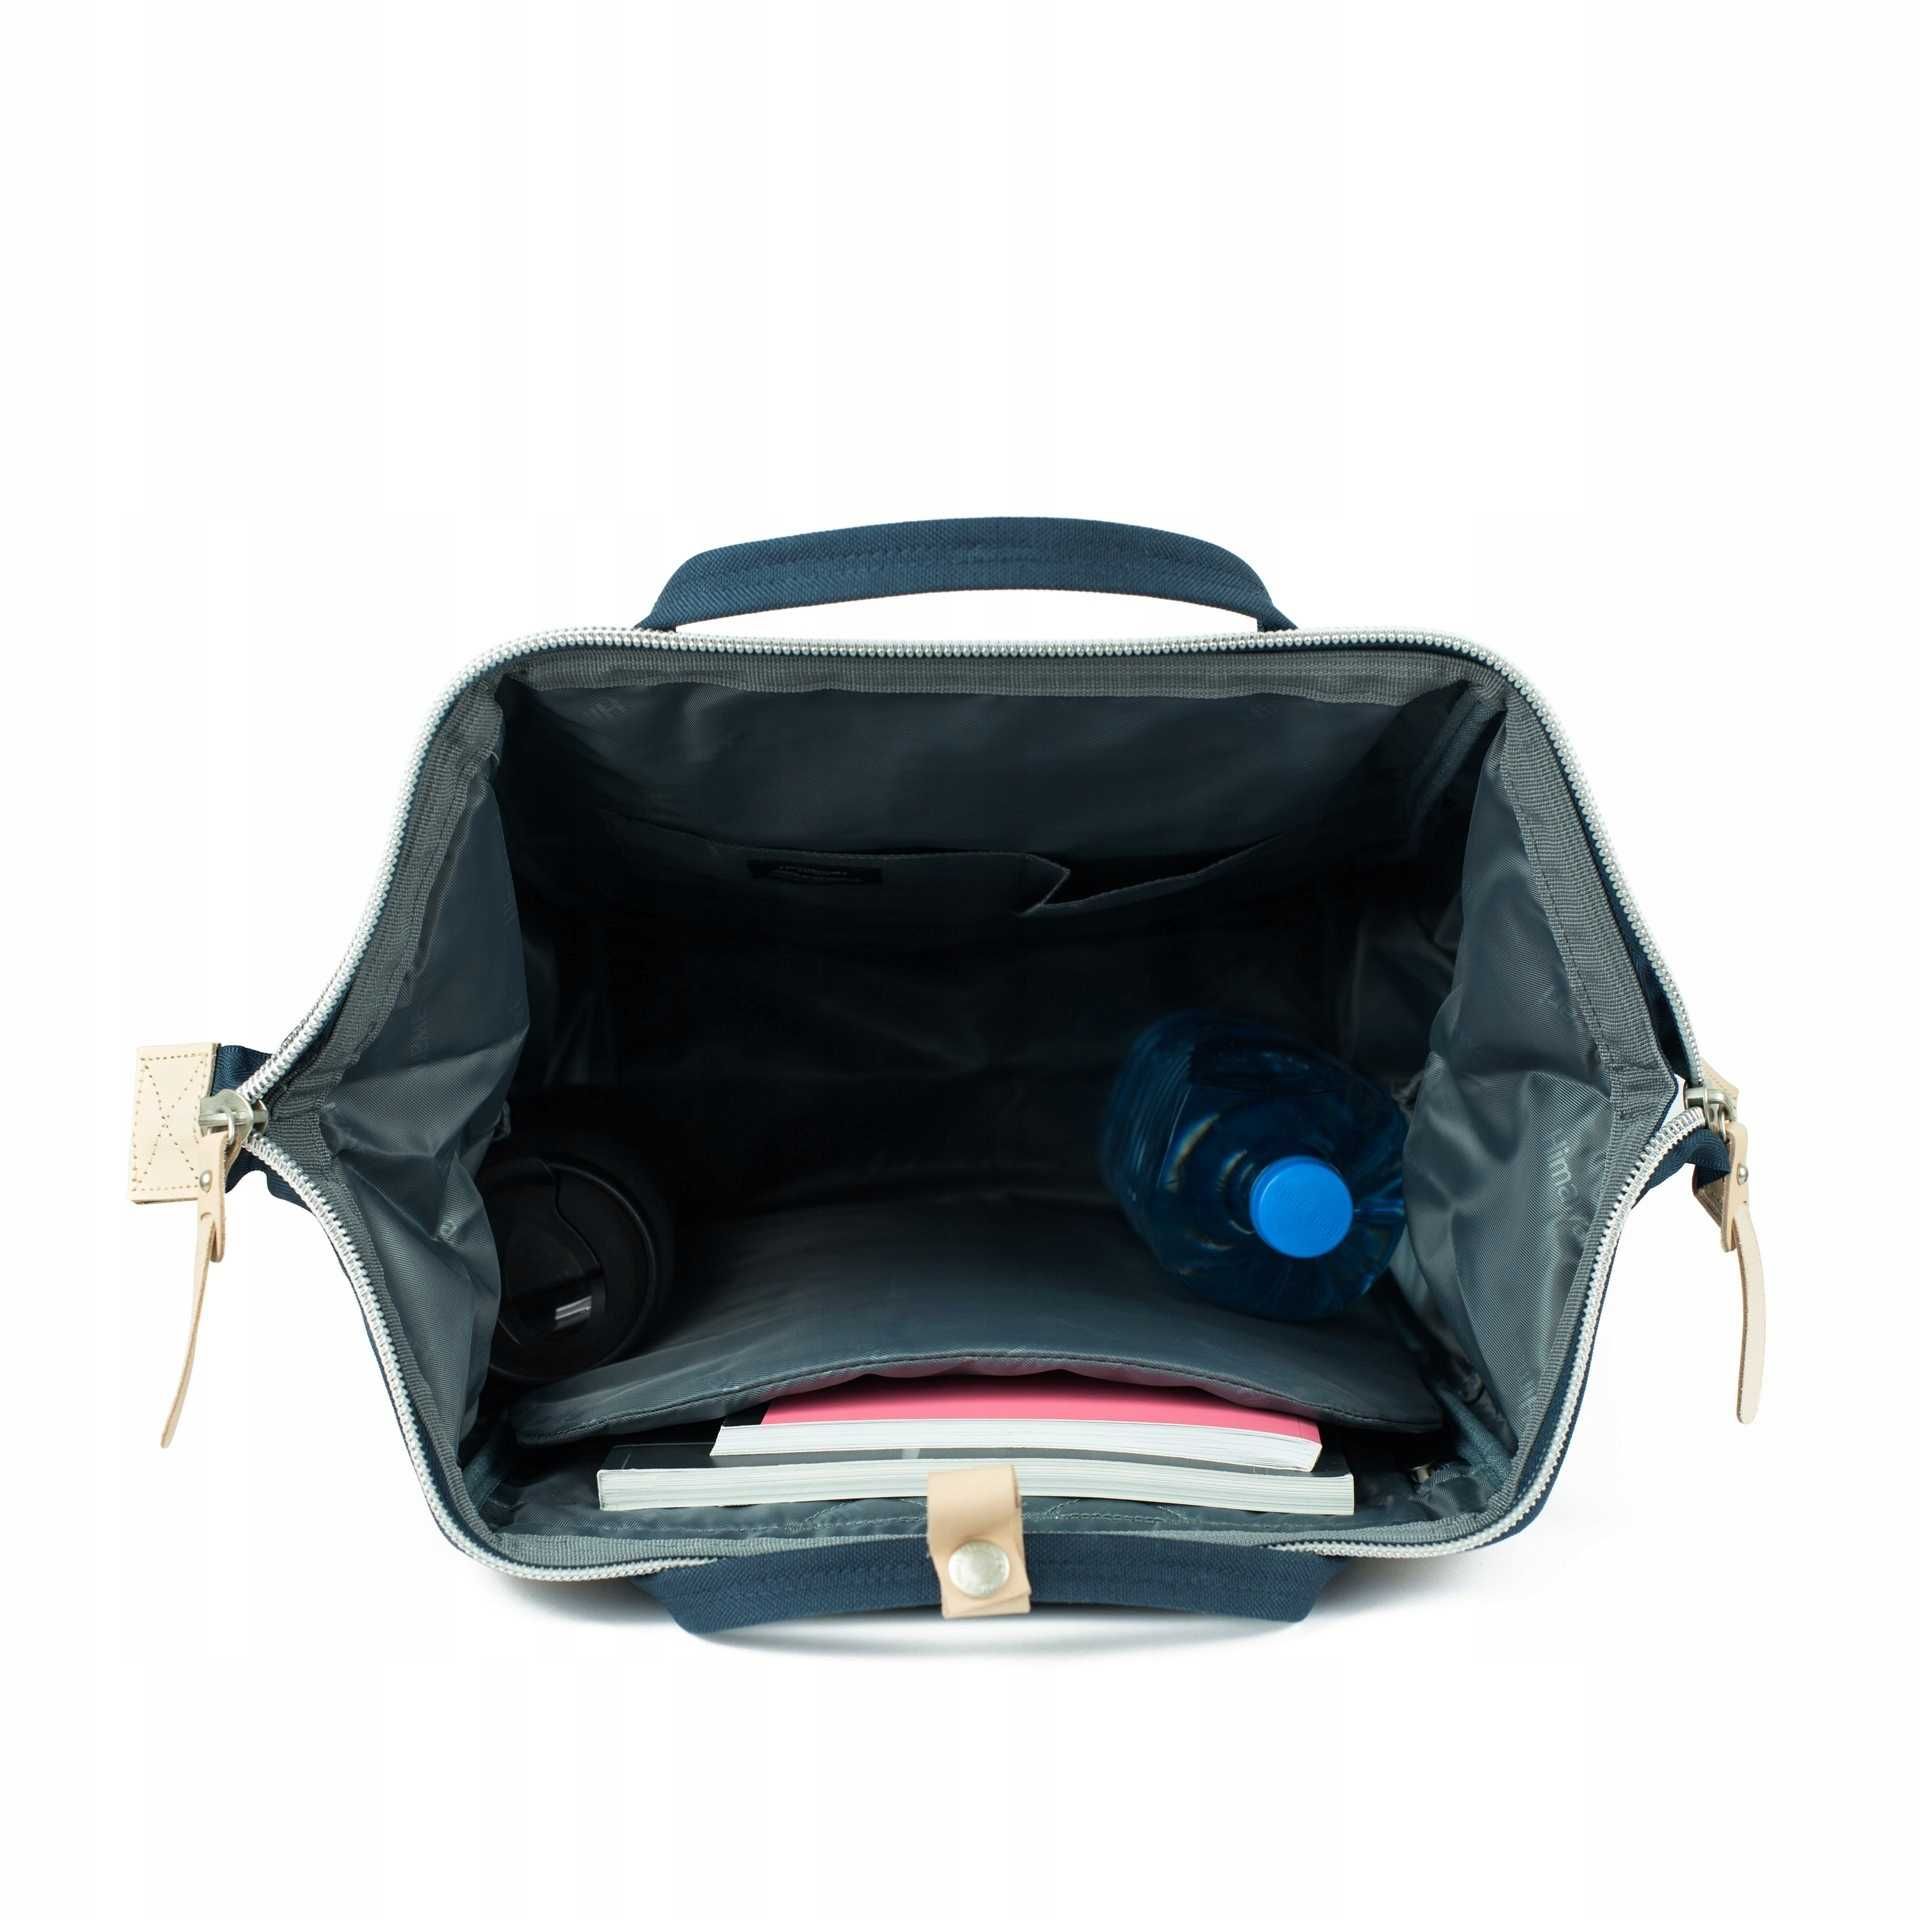 Himawari 9001 wodoodporny plecak na laptopa bordowy z portem USB